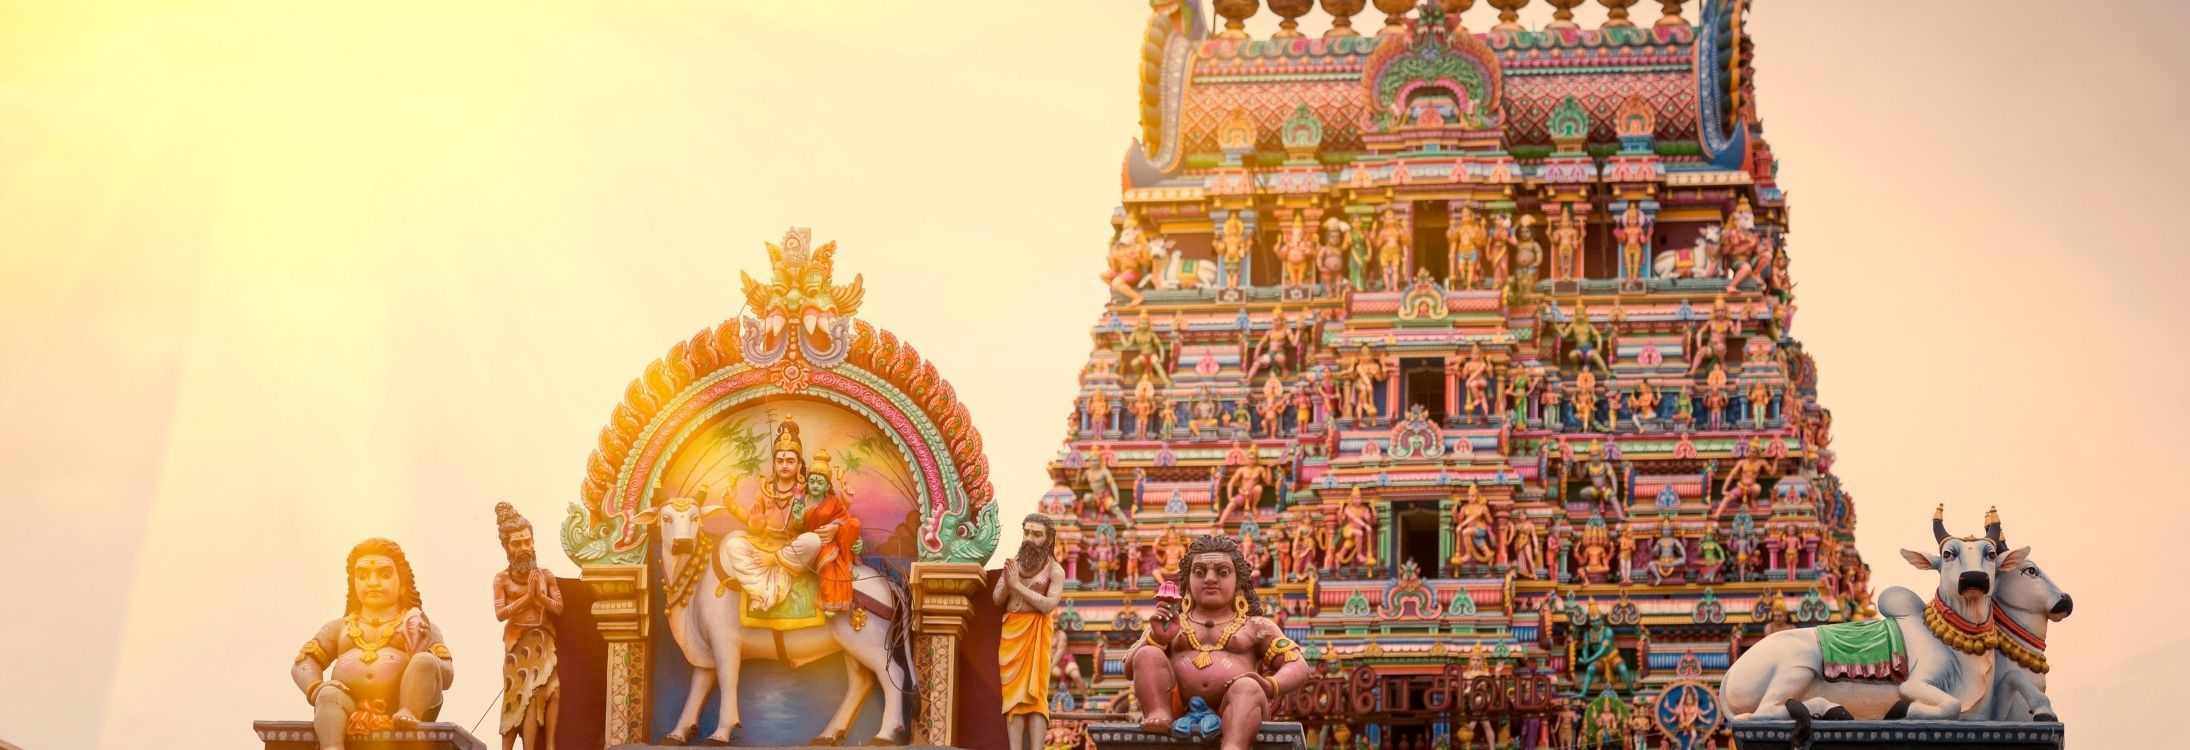 Kapaleeshwarar Temple Mylapore, Chennai